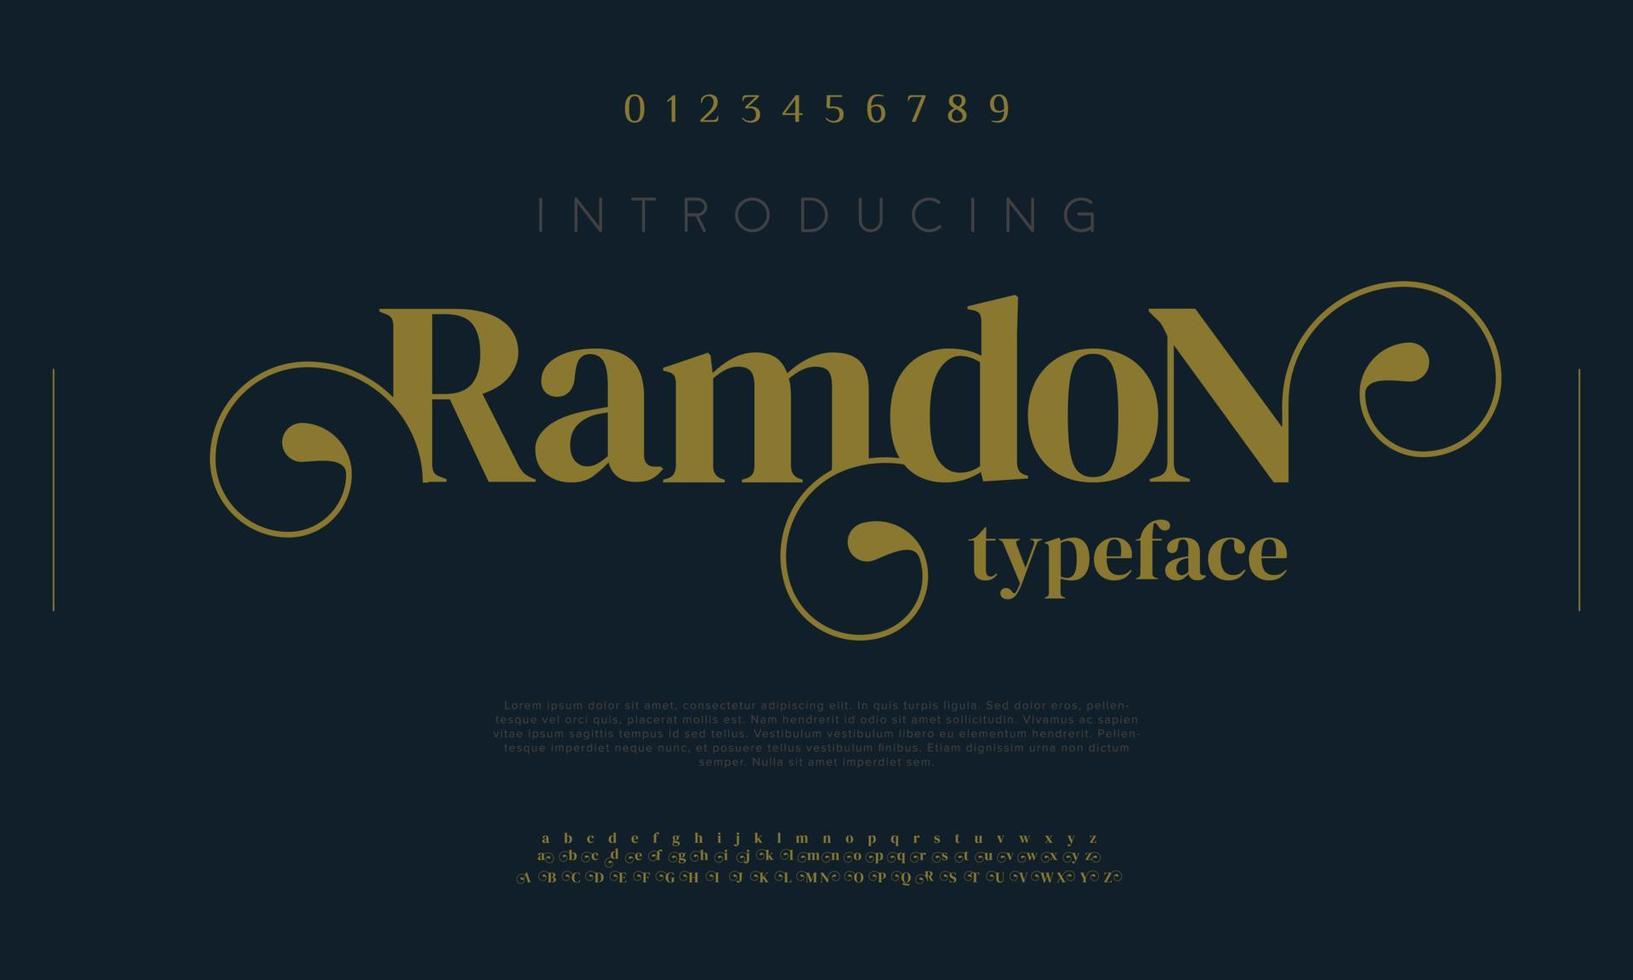 Ramdon luxury font typeface. Ramadan alphabet typography vector